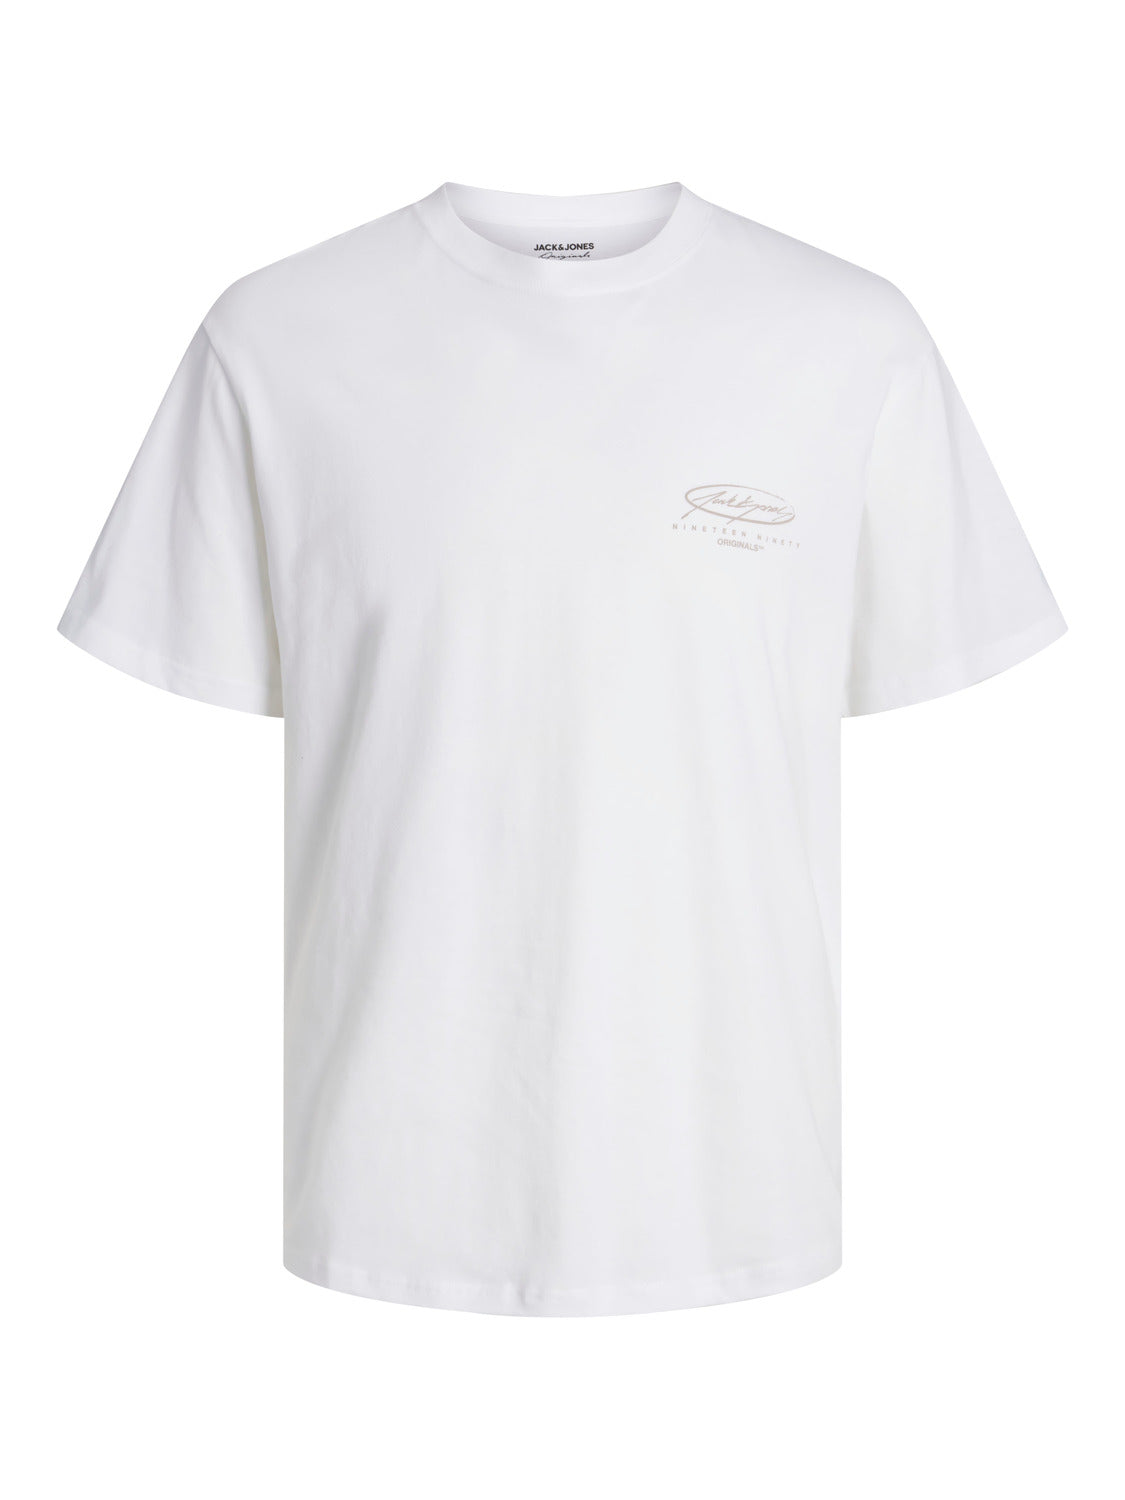 Camiseta de manga corta blanca - JORMONOBACK